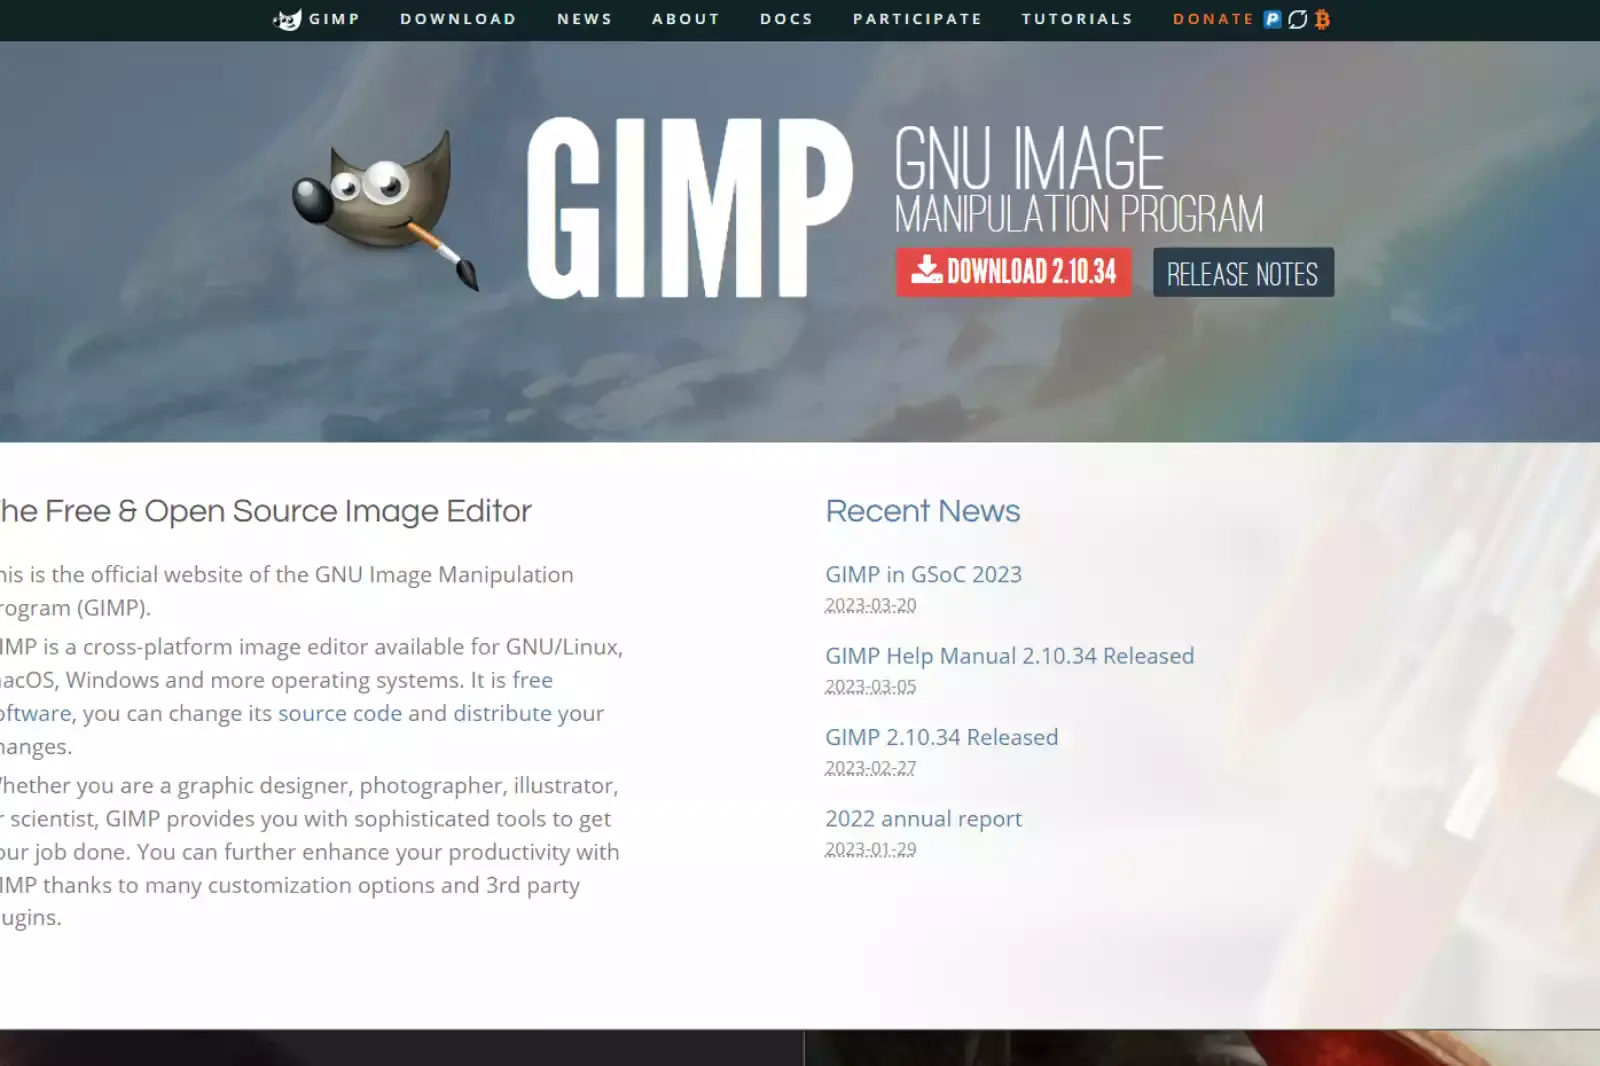 3. GIMP